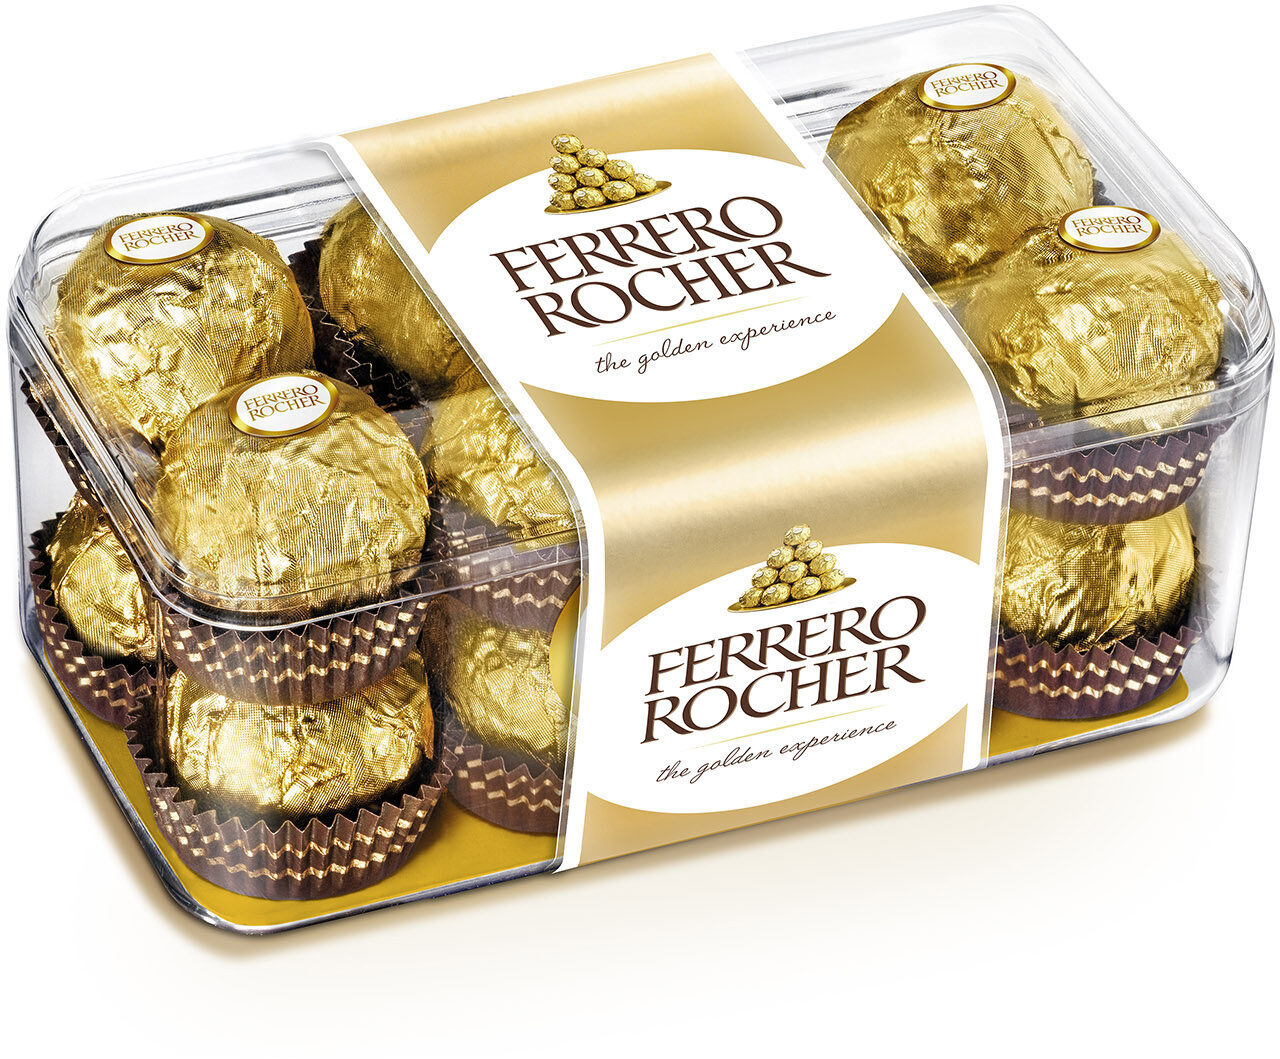 Ferrero rocher, whole hazelnut in milk chocolate and nut croquante - Producto